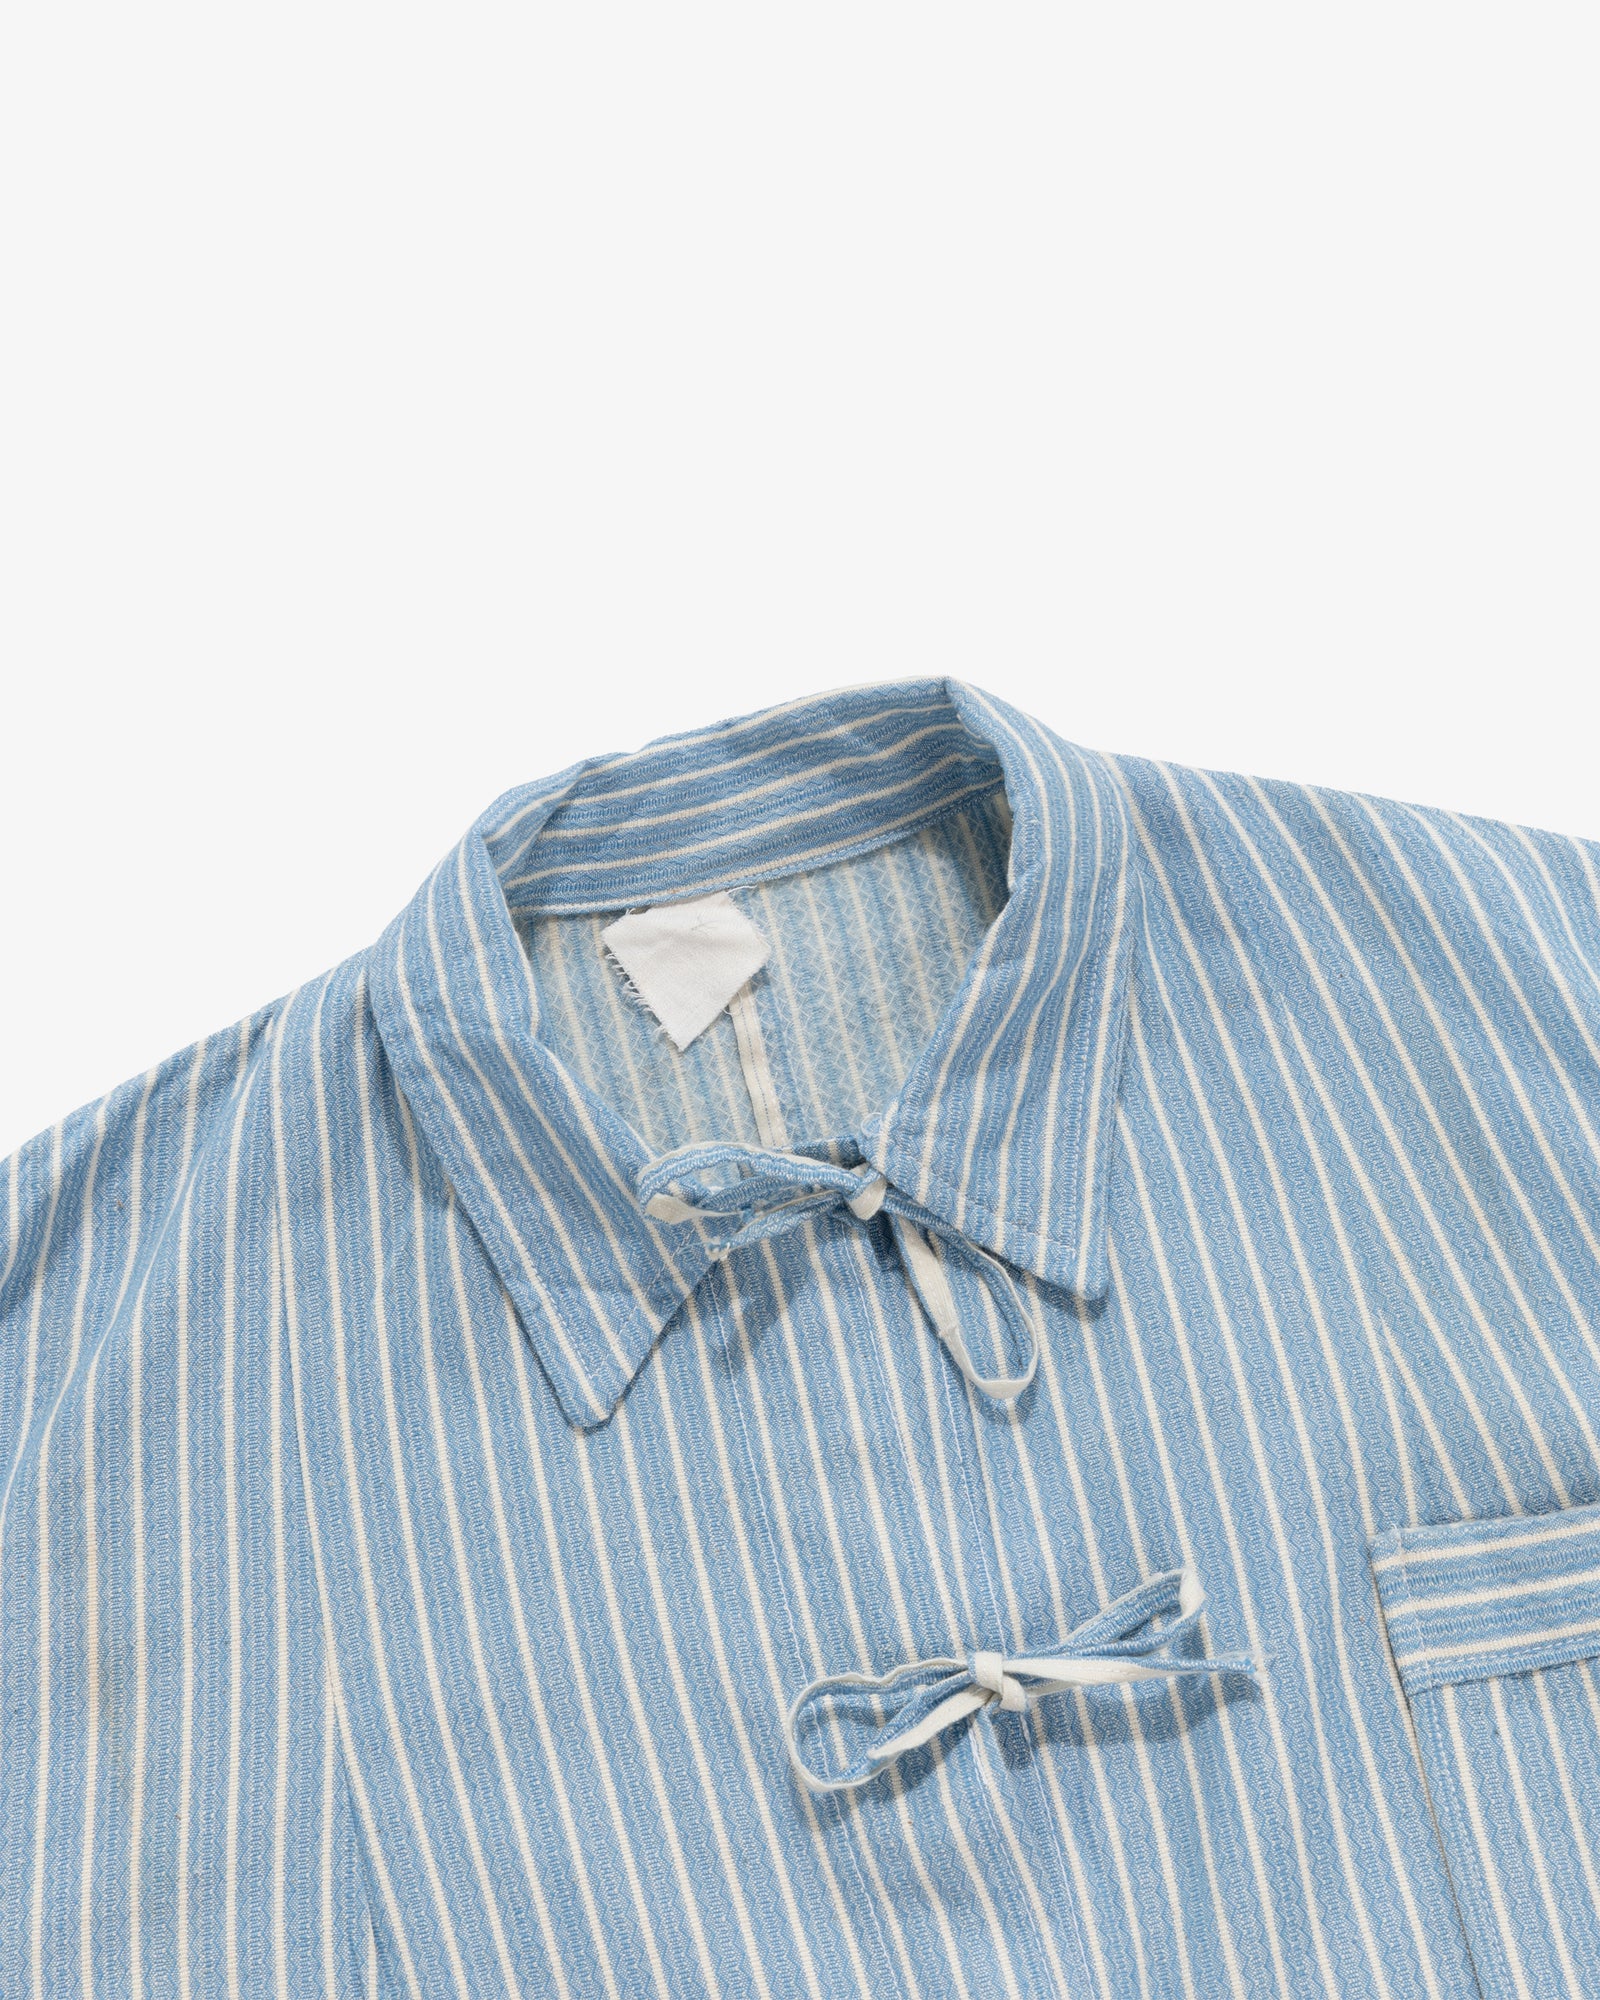 Vintage Striped Tie Shirt